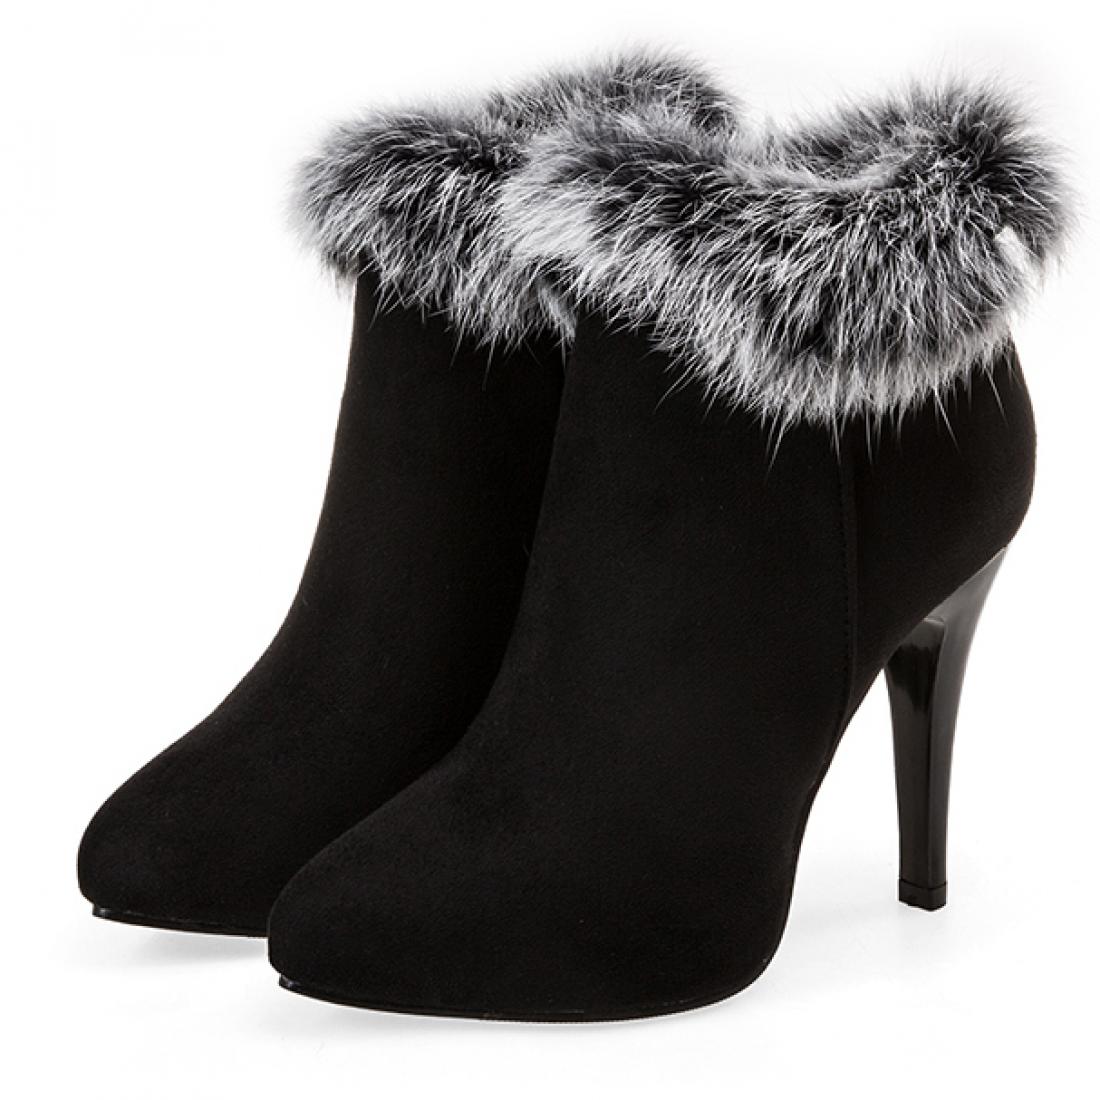 Black Suede Rabbit Fur Ankle Trim High Stiletto Heels Boots ...